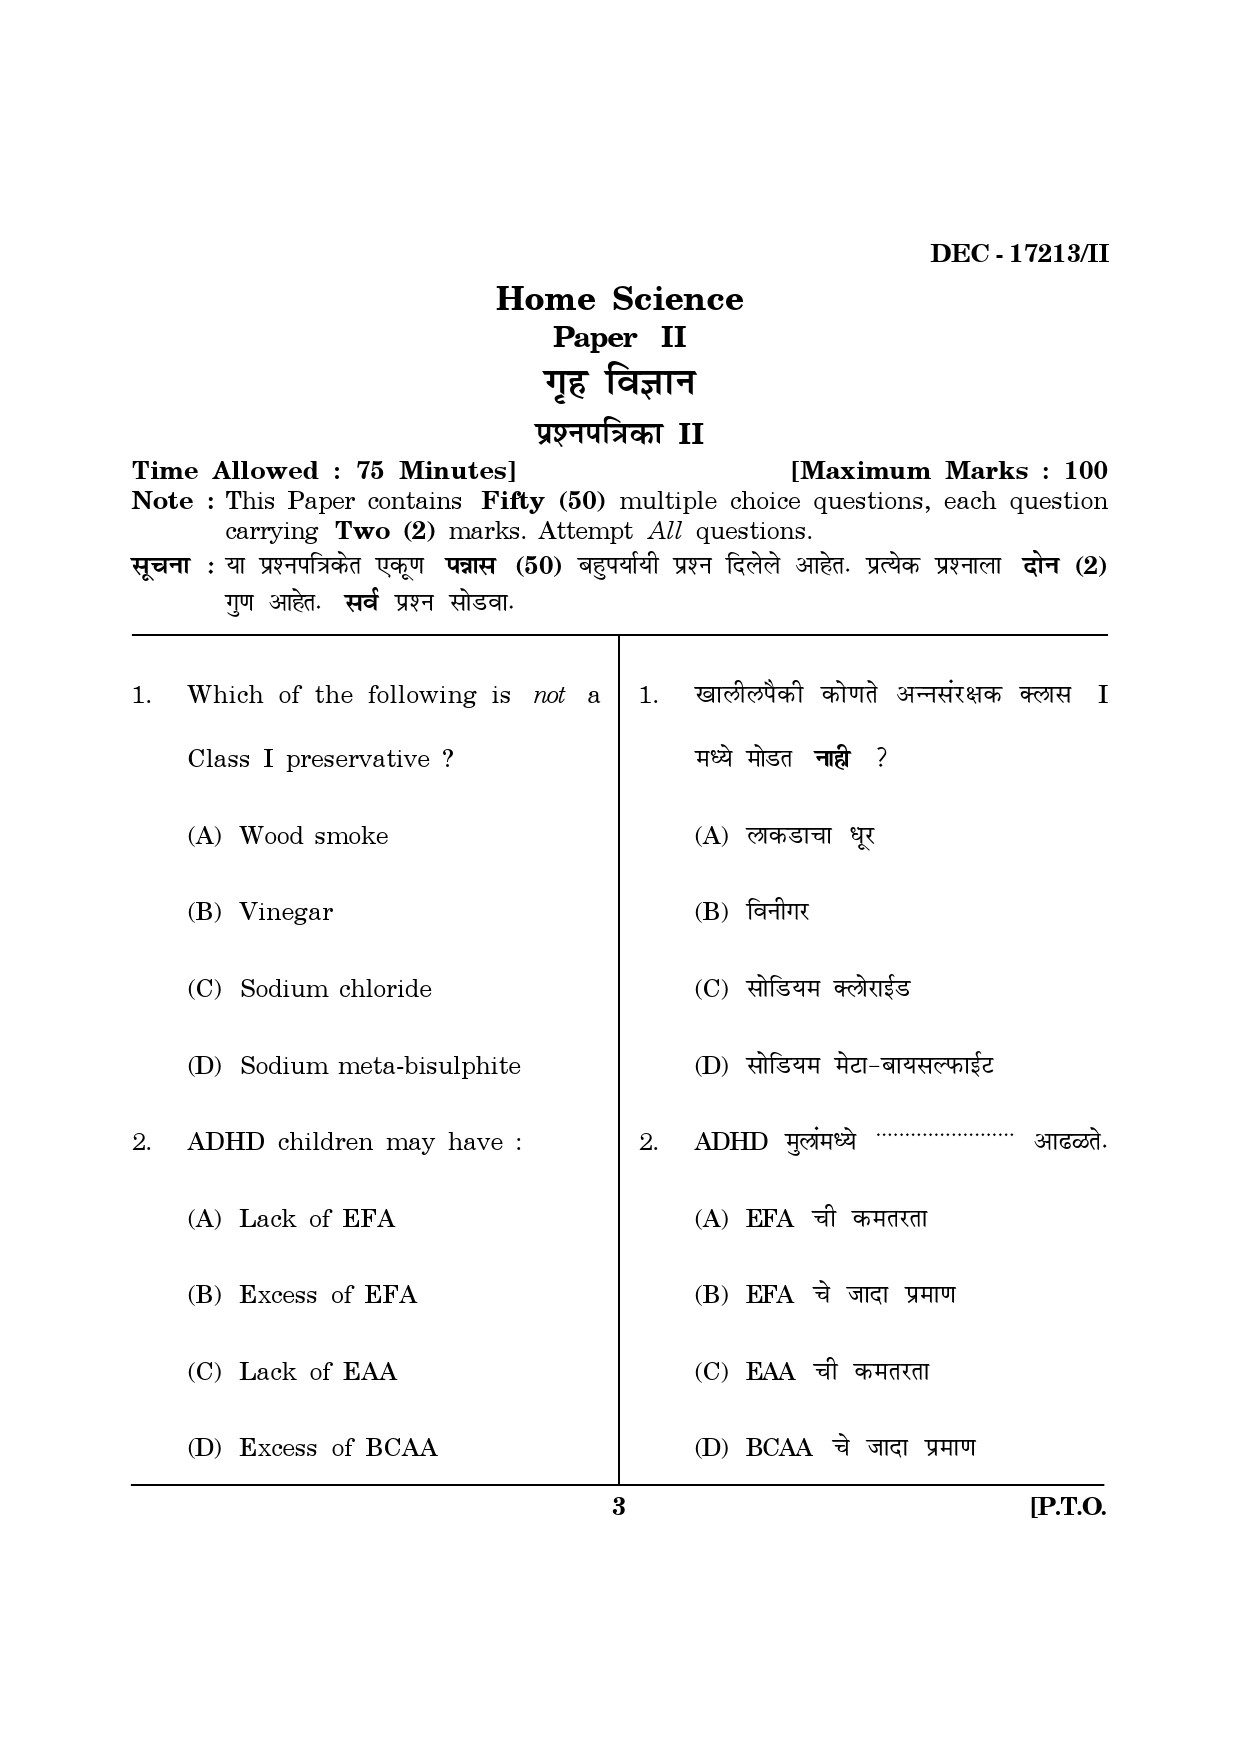 Maharashtra SET Home Science Question Paper II December 2013 2